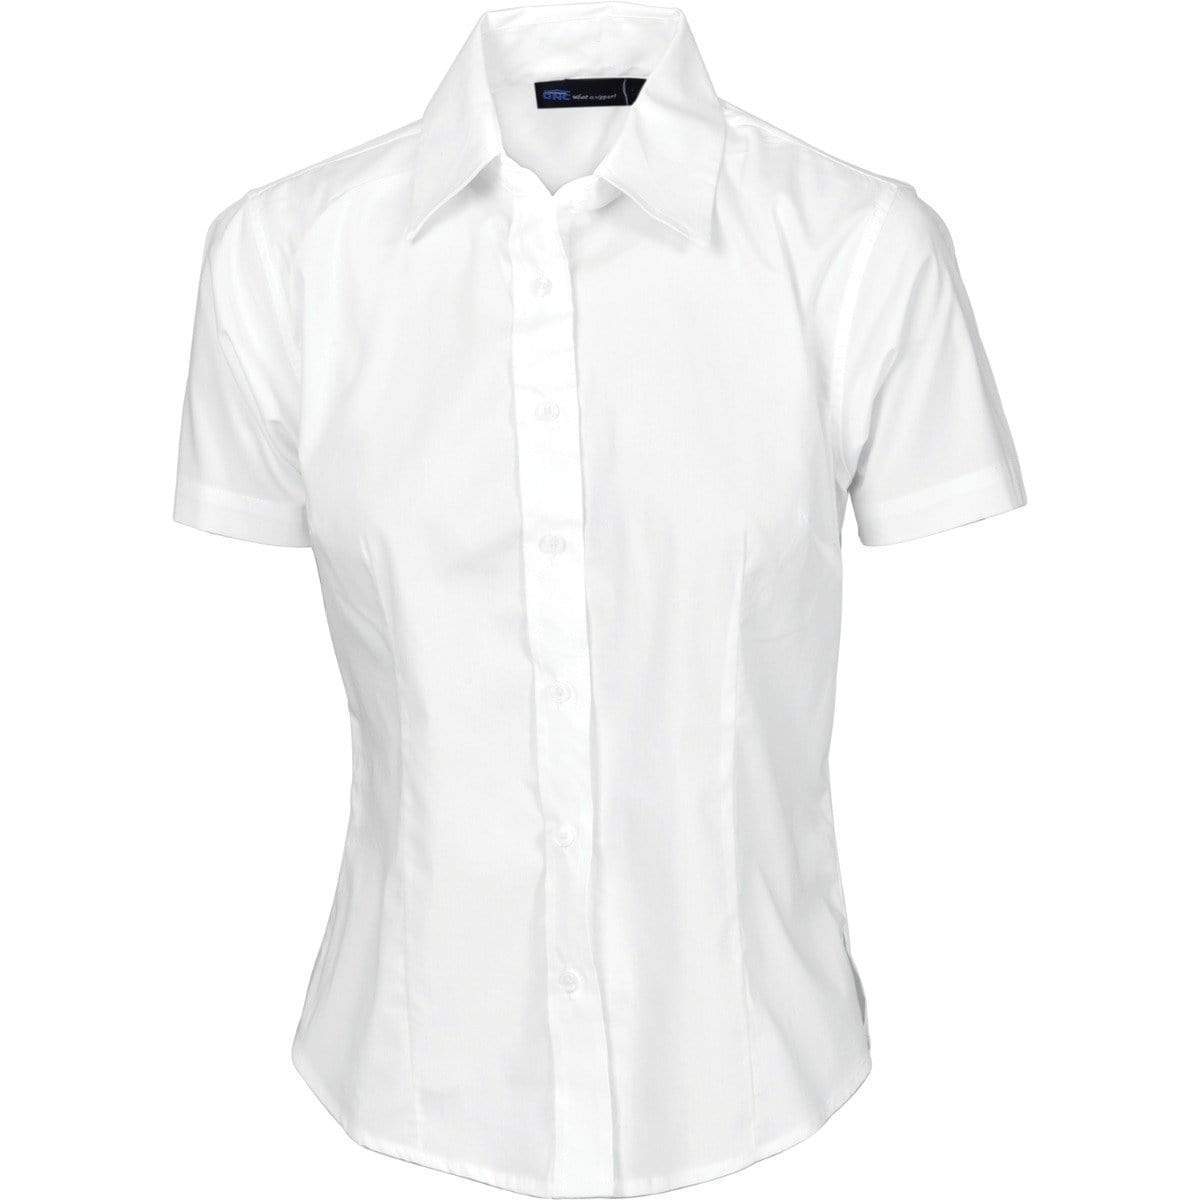 Dnc Workwear Ladies Premier Stretch Poplin Short Sleeve Business Shirt - 4231 Corporate Wear DNC Workwear White 6 